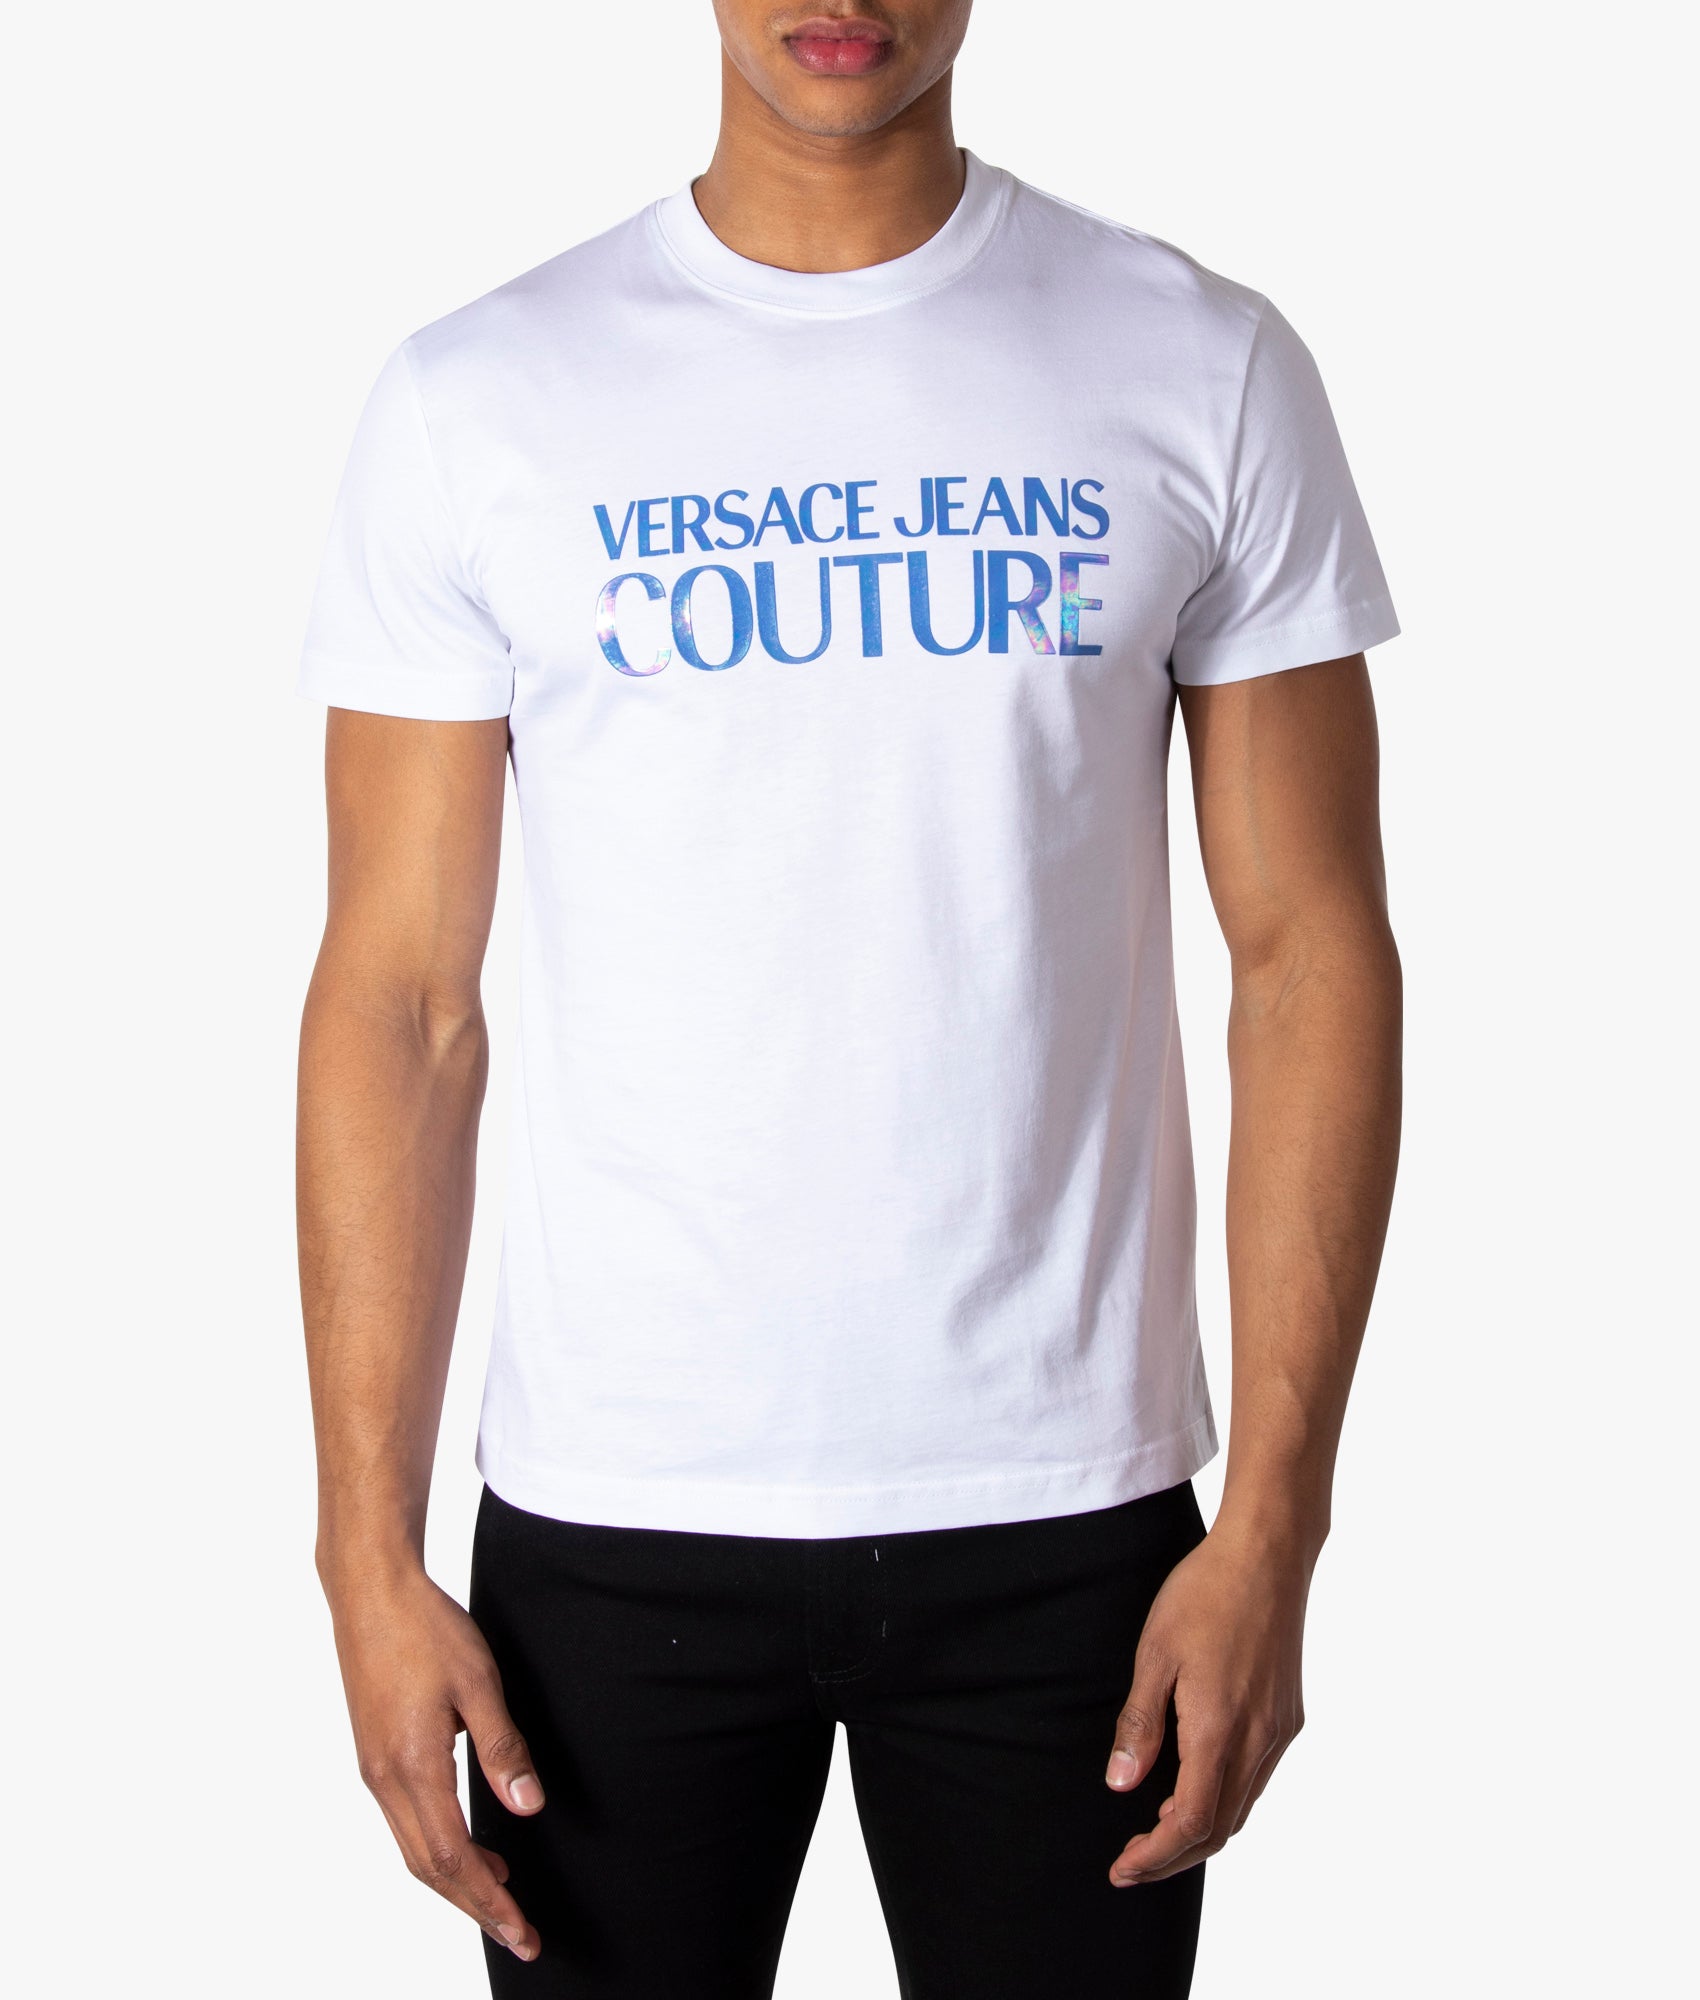 Versace Blue And White Shirt Cheap Sale | website.jkuat.ac.ke